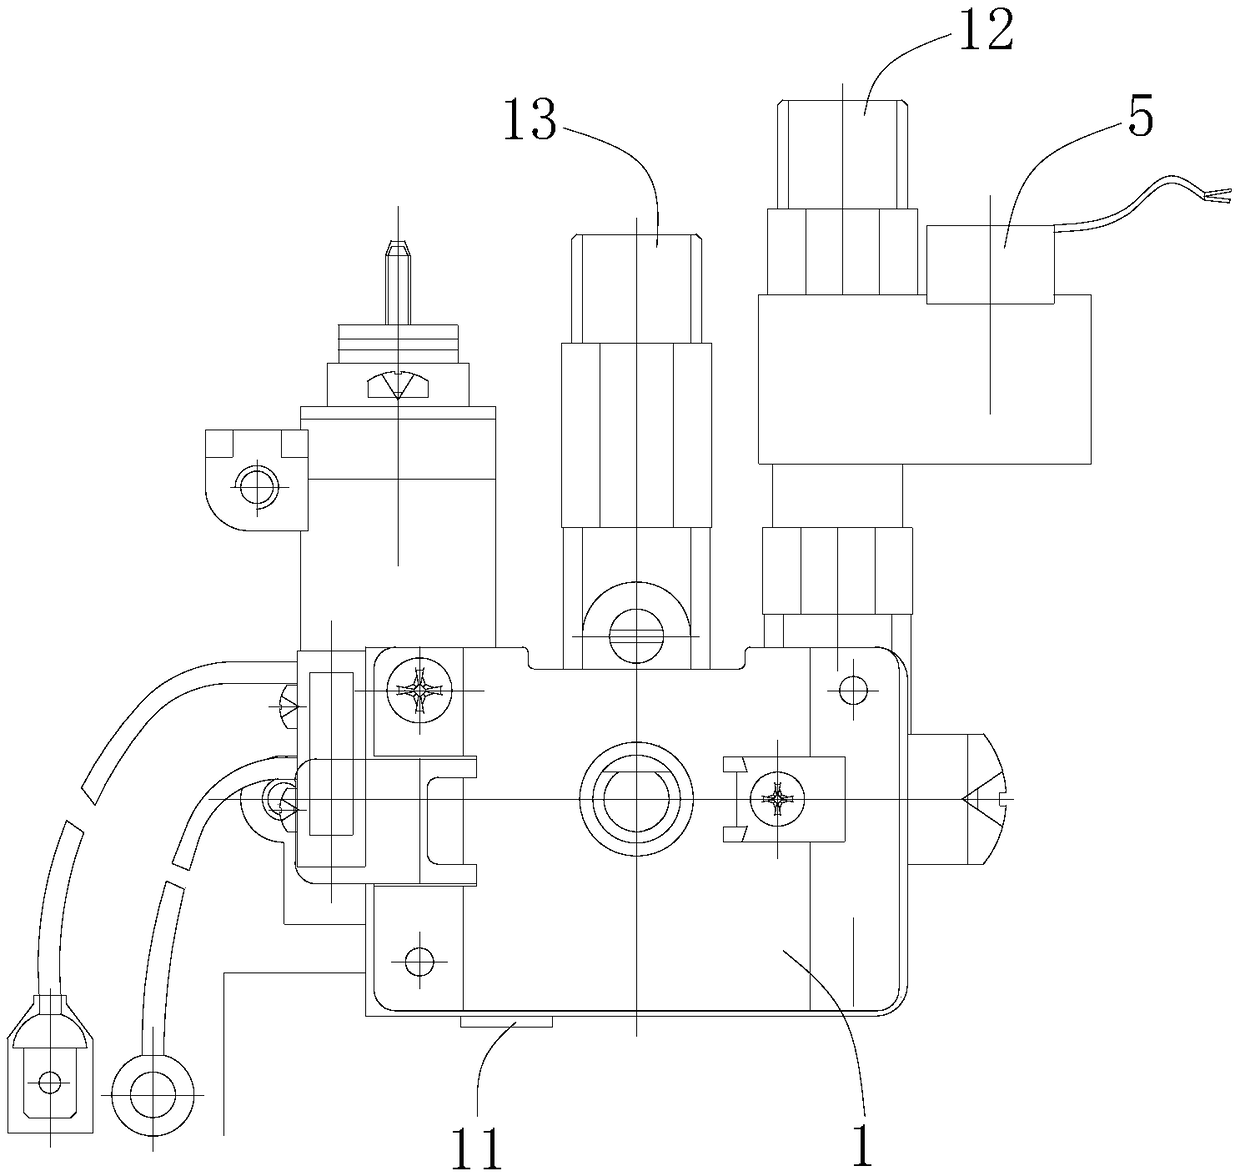 Regulating valve and gas stove